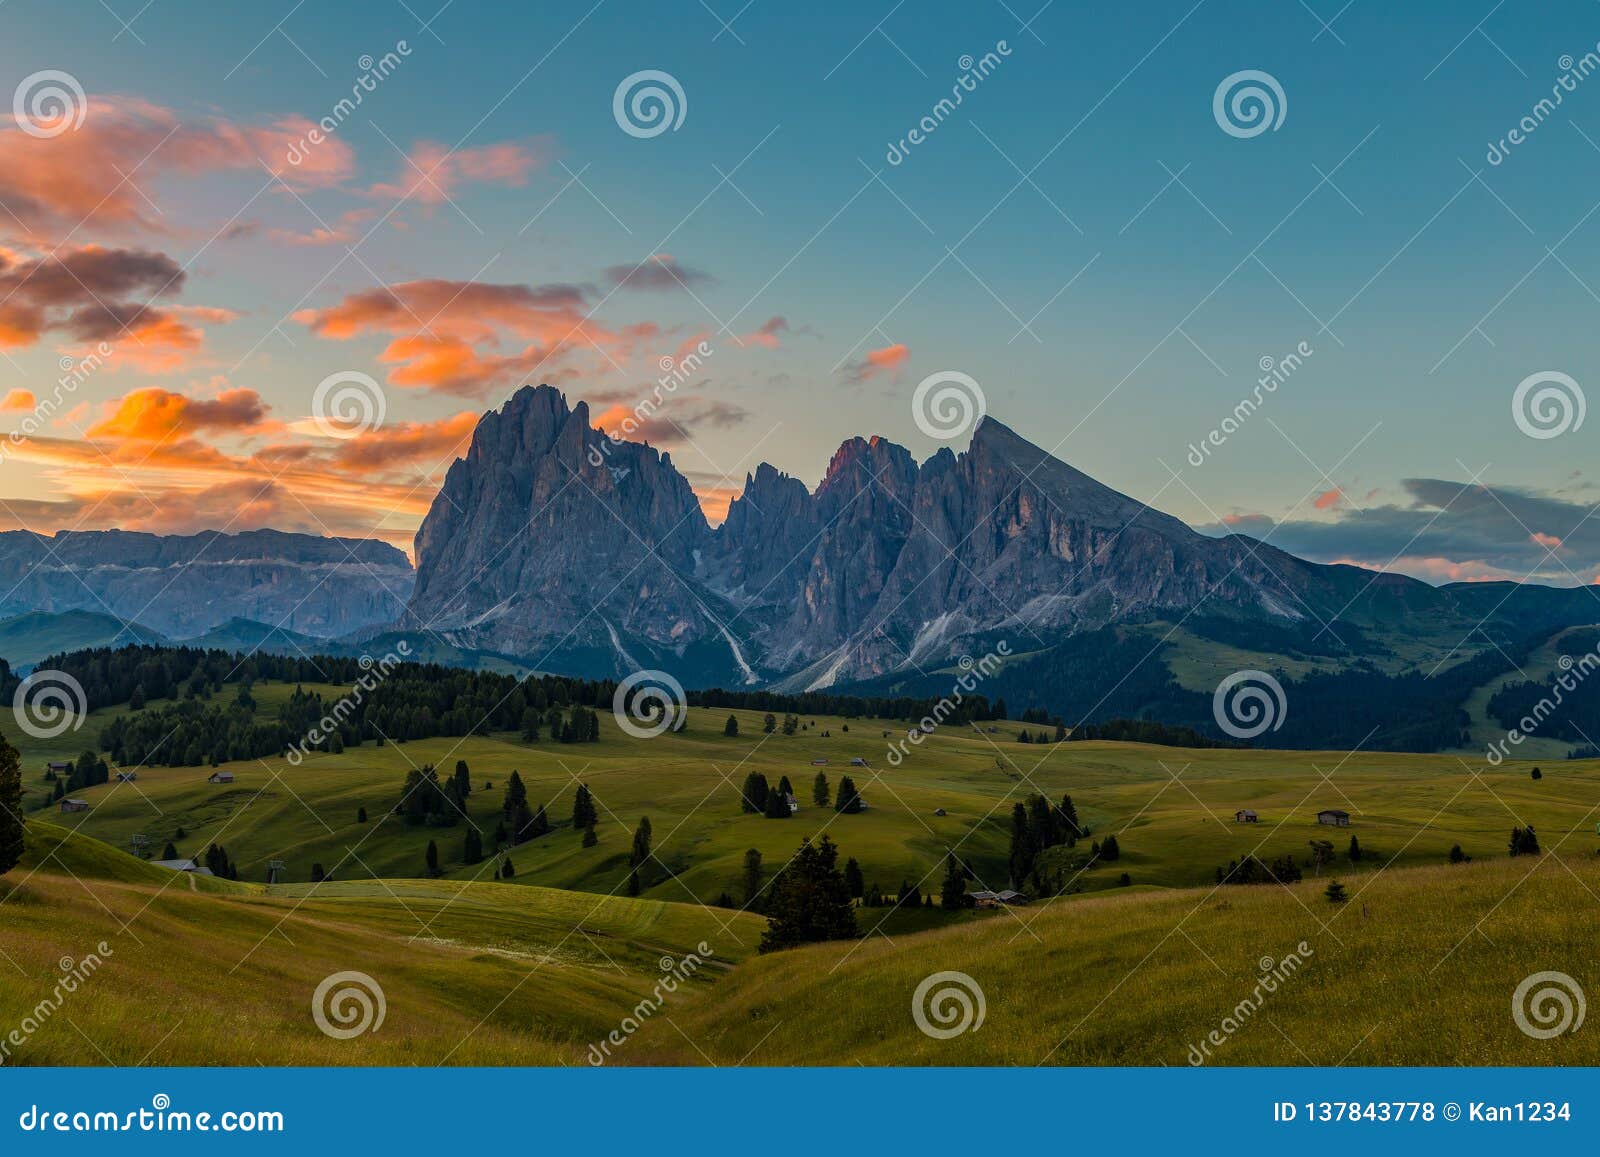 Alpe di Siusi Sunrise | kwyPHOTOGRAPHY